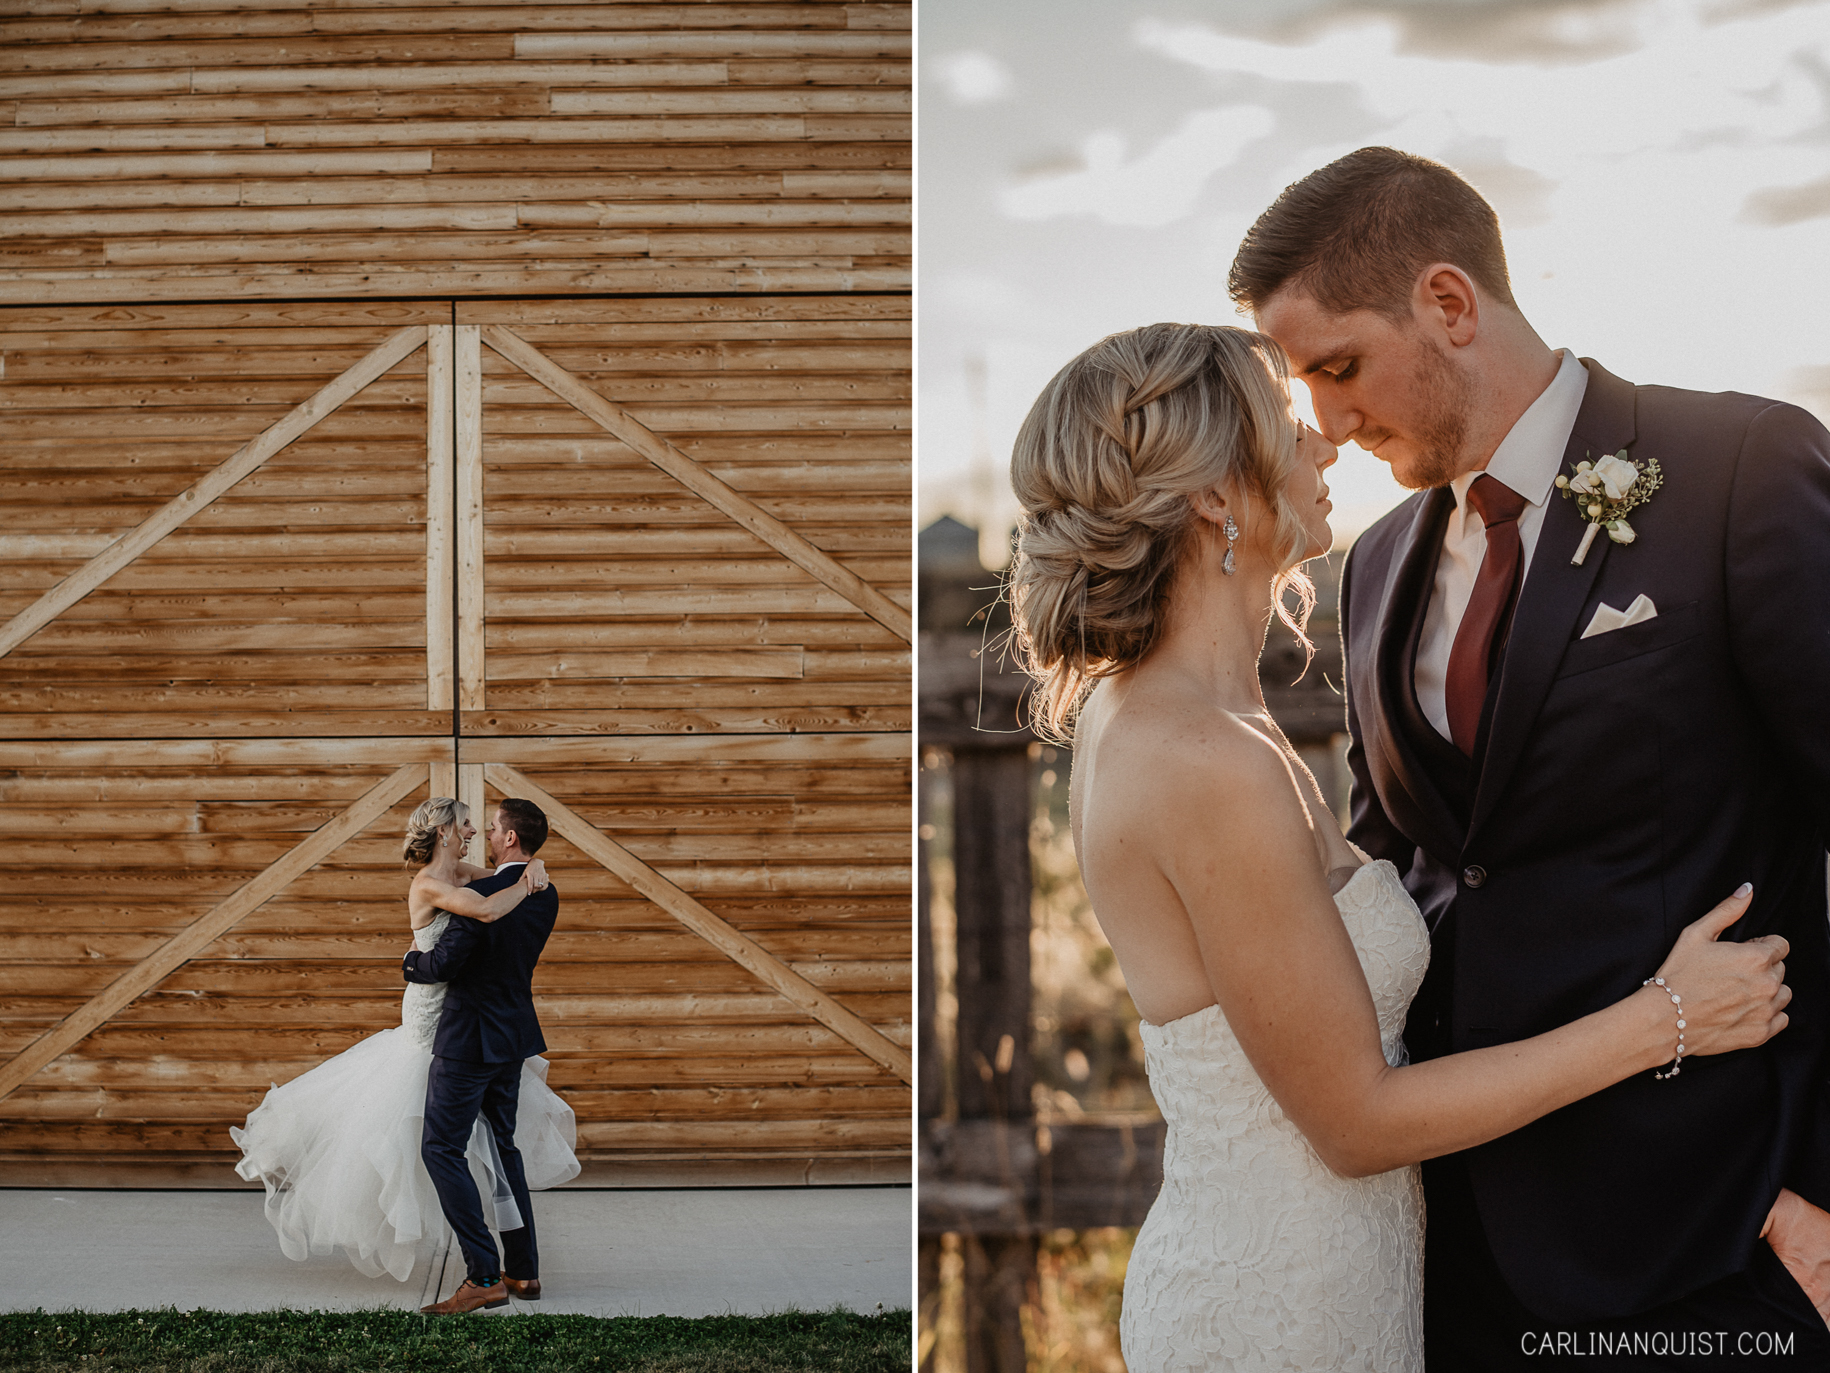 Sunset Portraits | Willow Lane Barn Wedding Photos